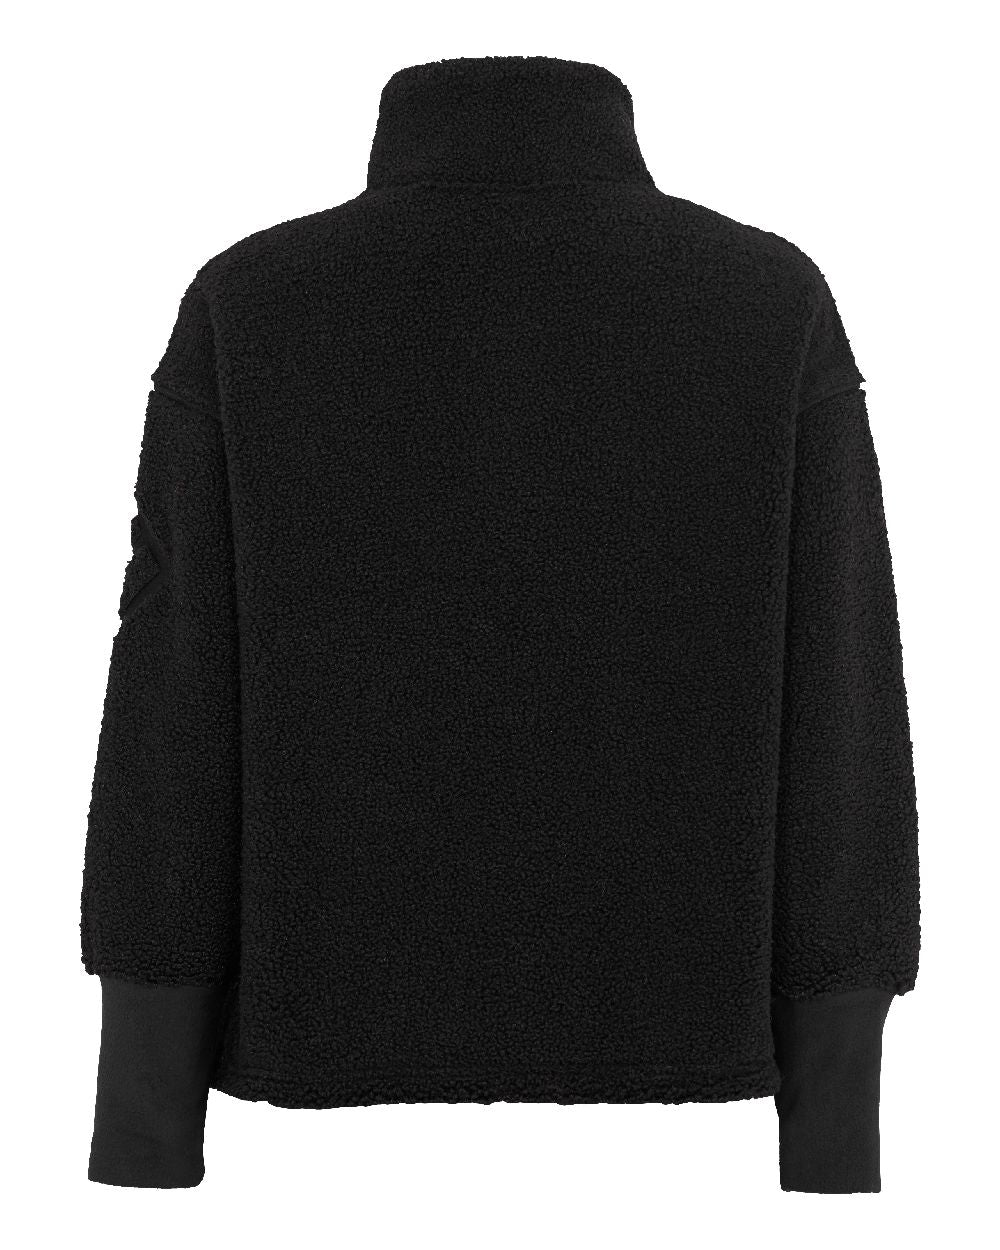 Didriksons Mella Full-Zip Jacket in Black 